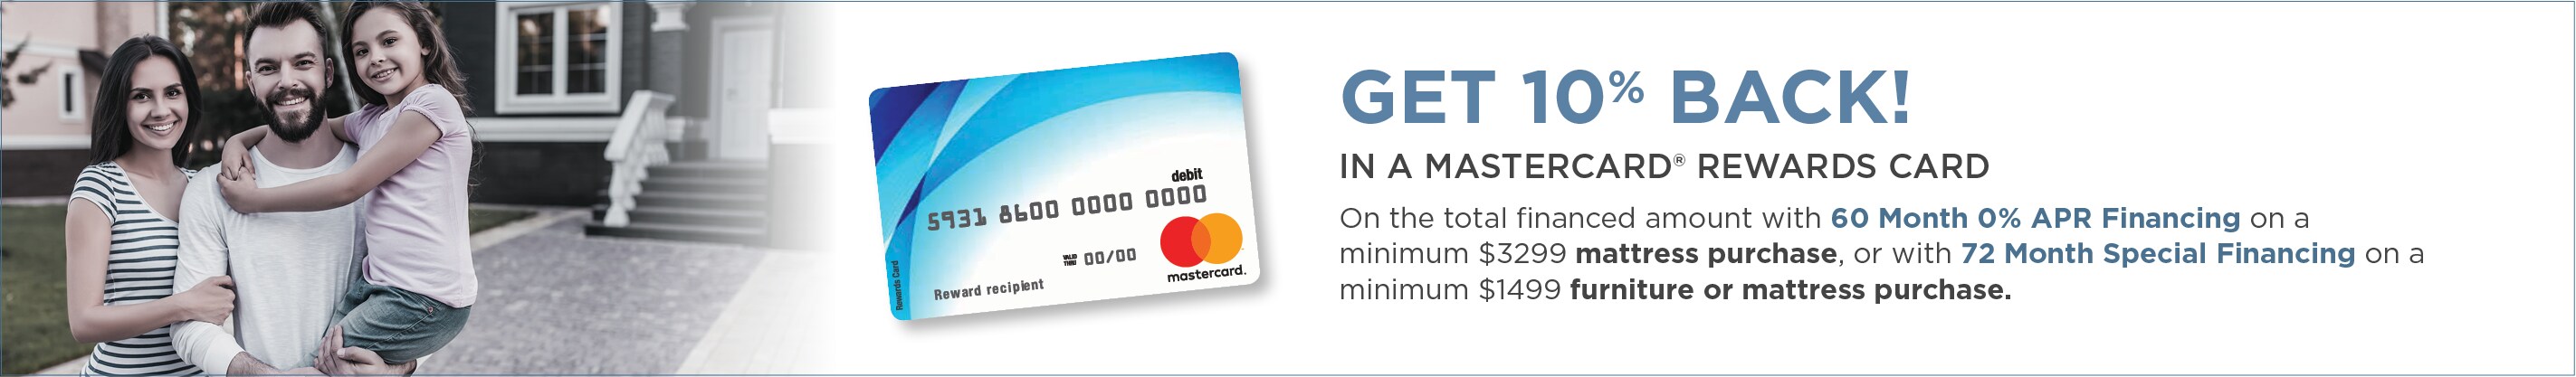 10% Back MasterCard Rewards Card Rebate